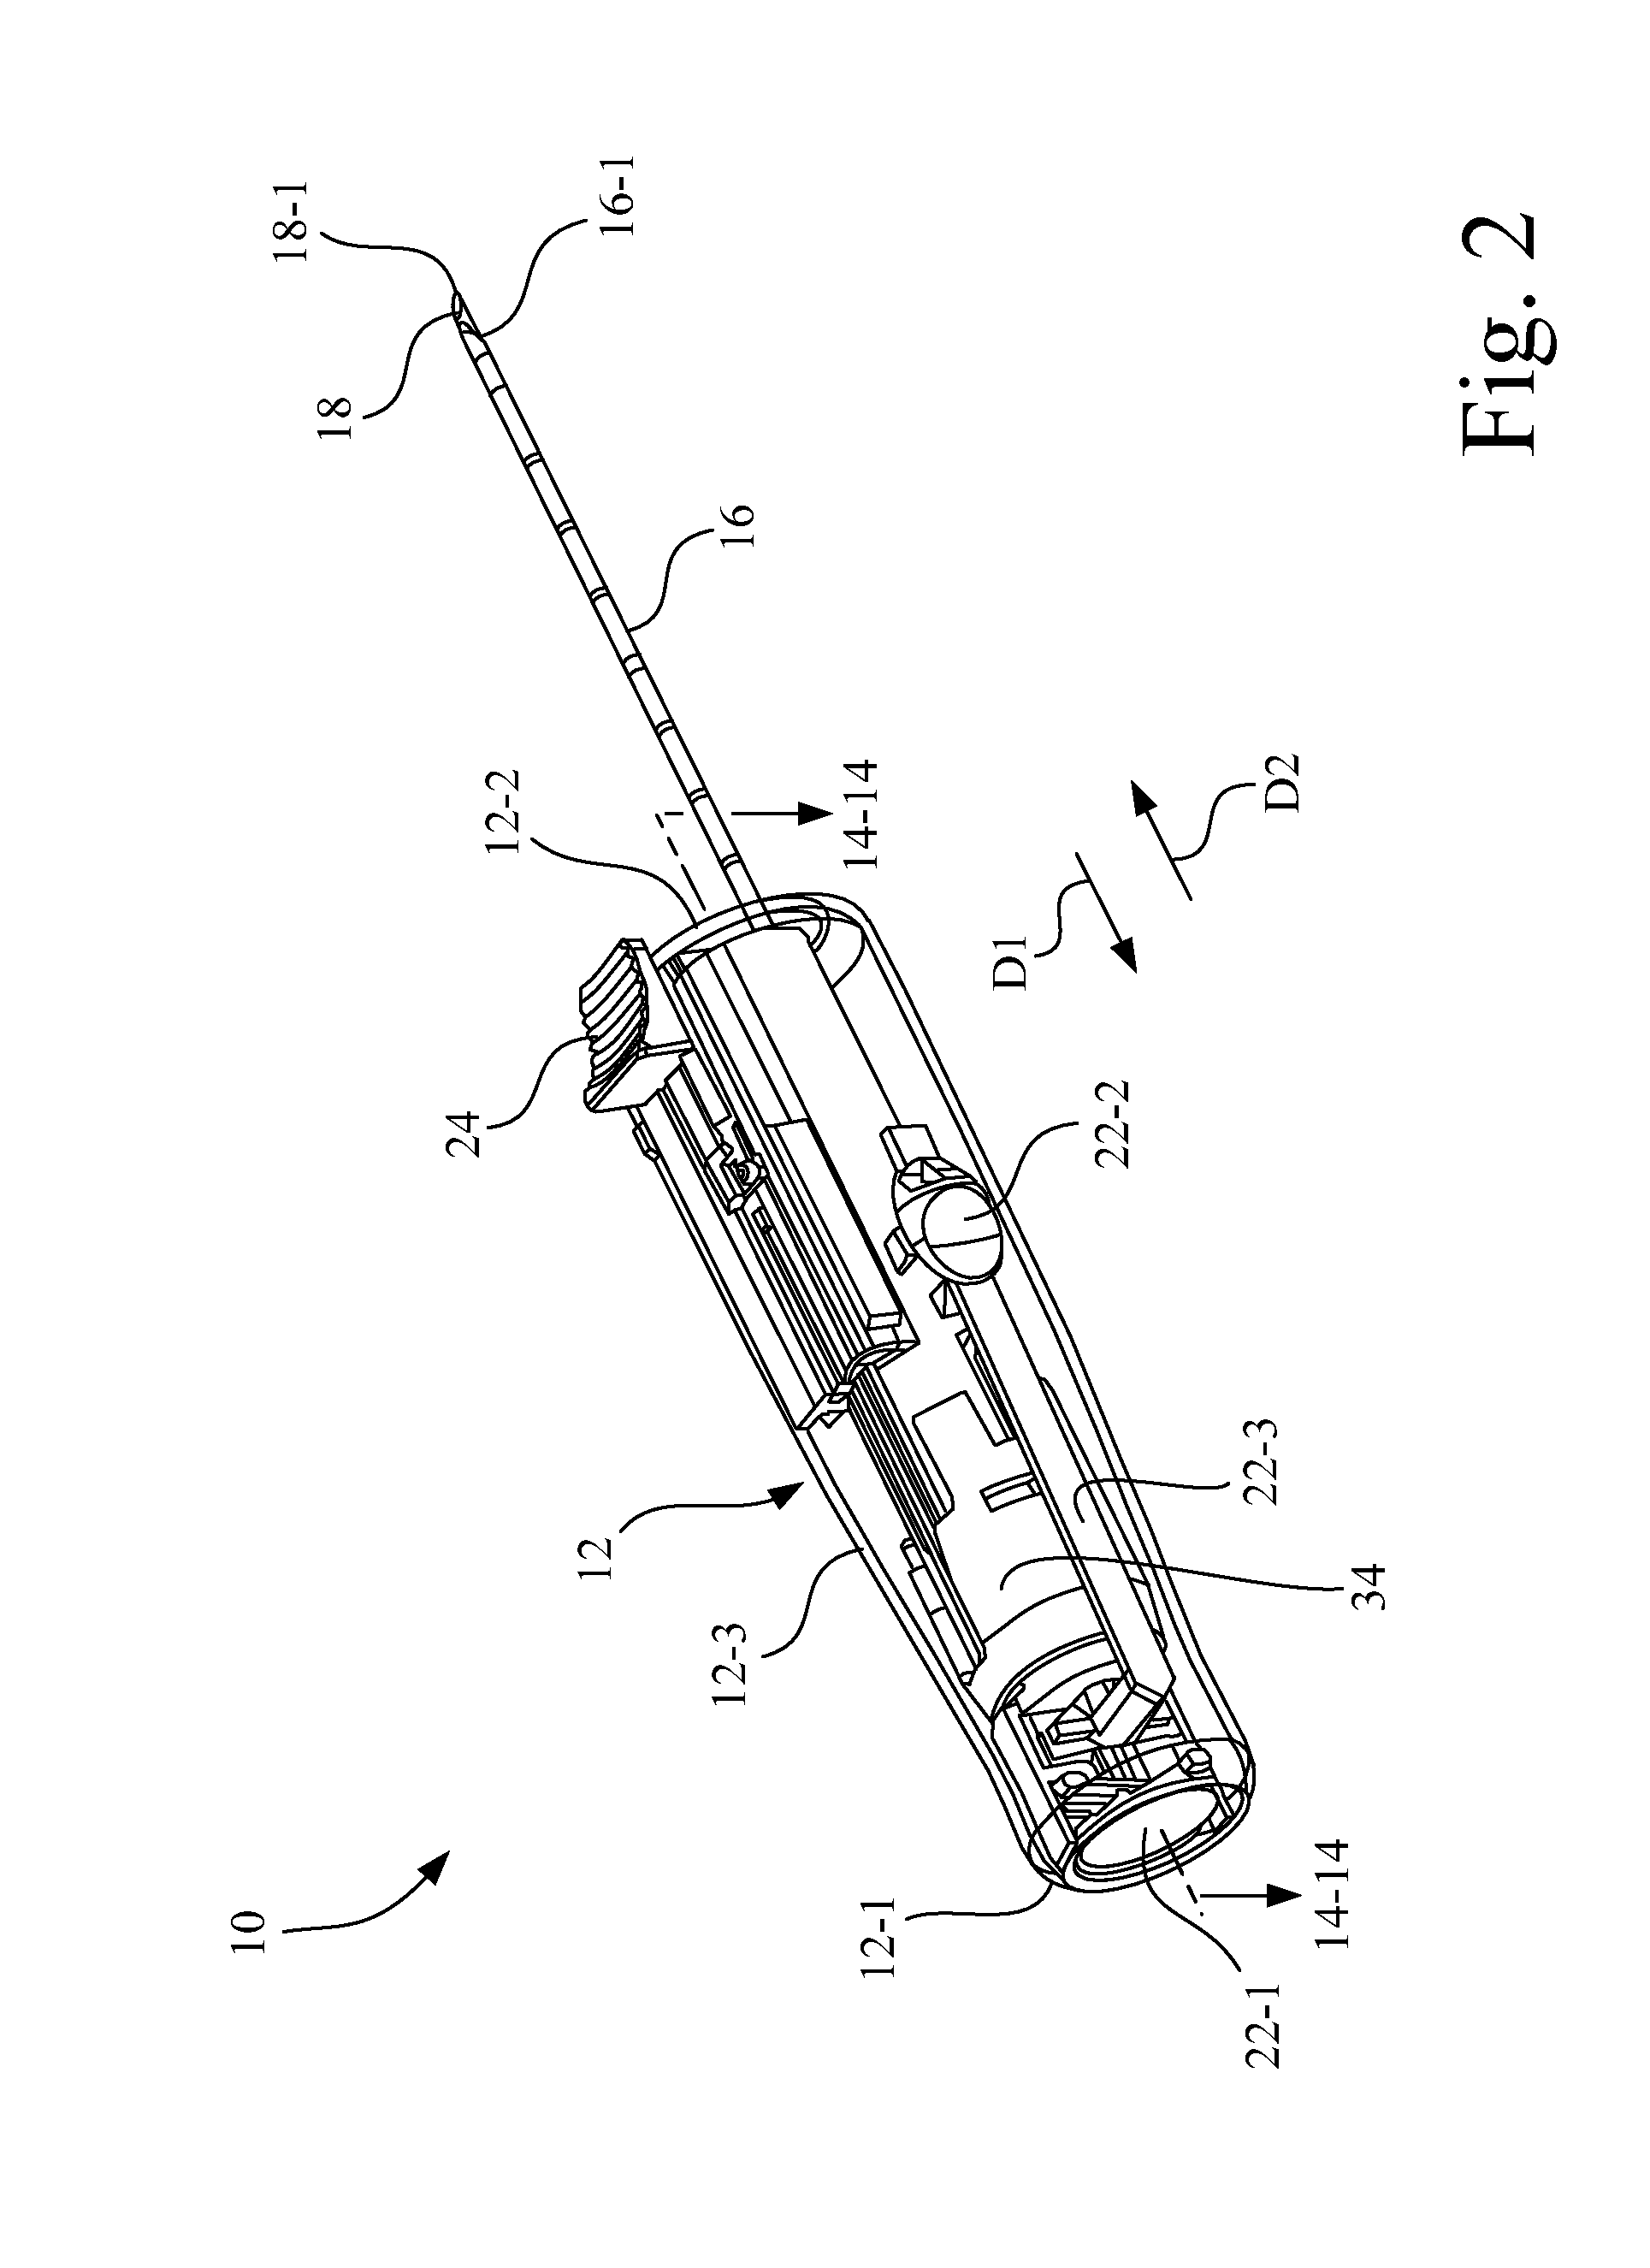 Core needle biopsy device